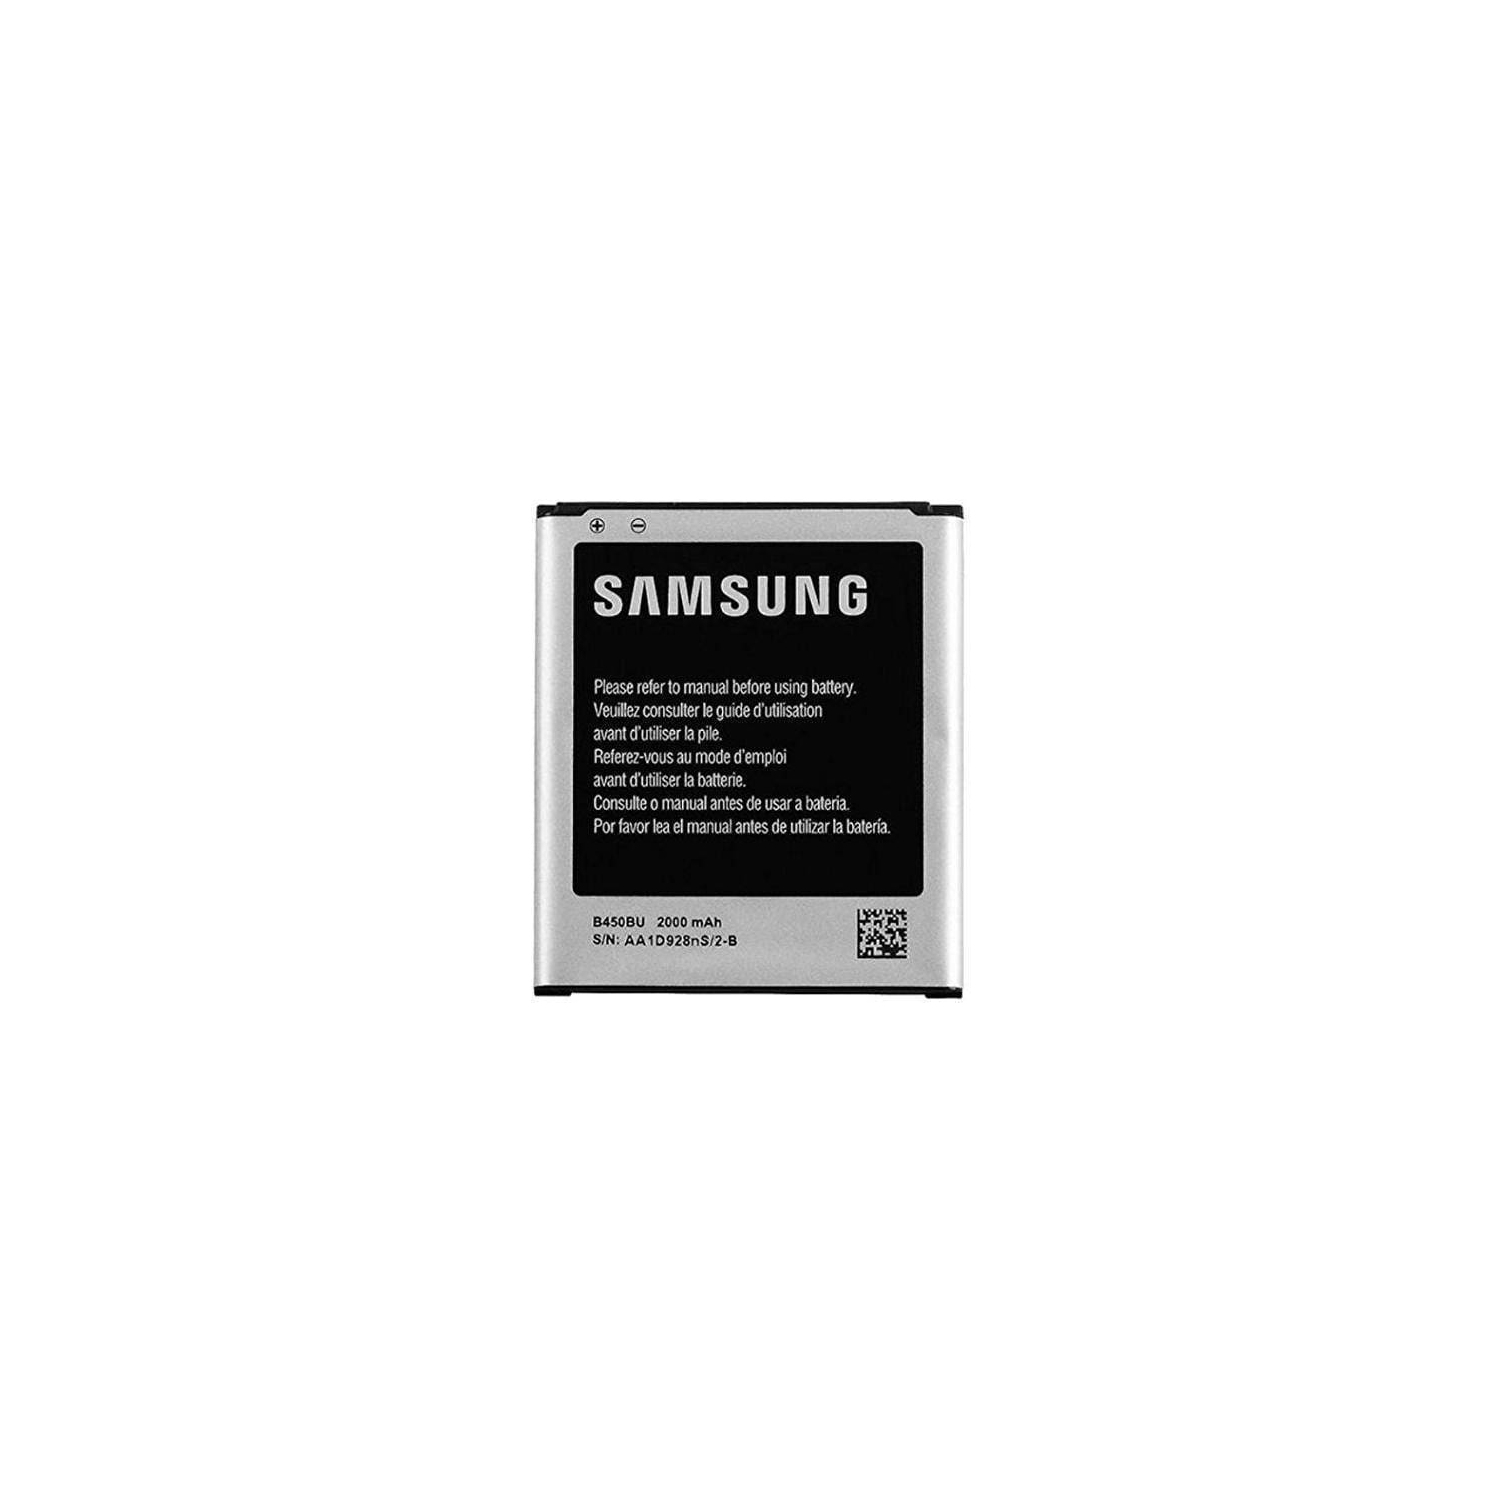 Original Samsung Galaxy S3 Mini battery B450BU 2000 mAh for G730A G730V G730W8